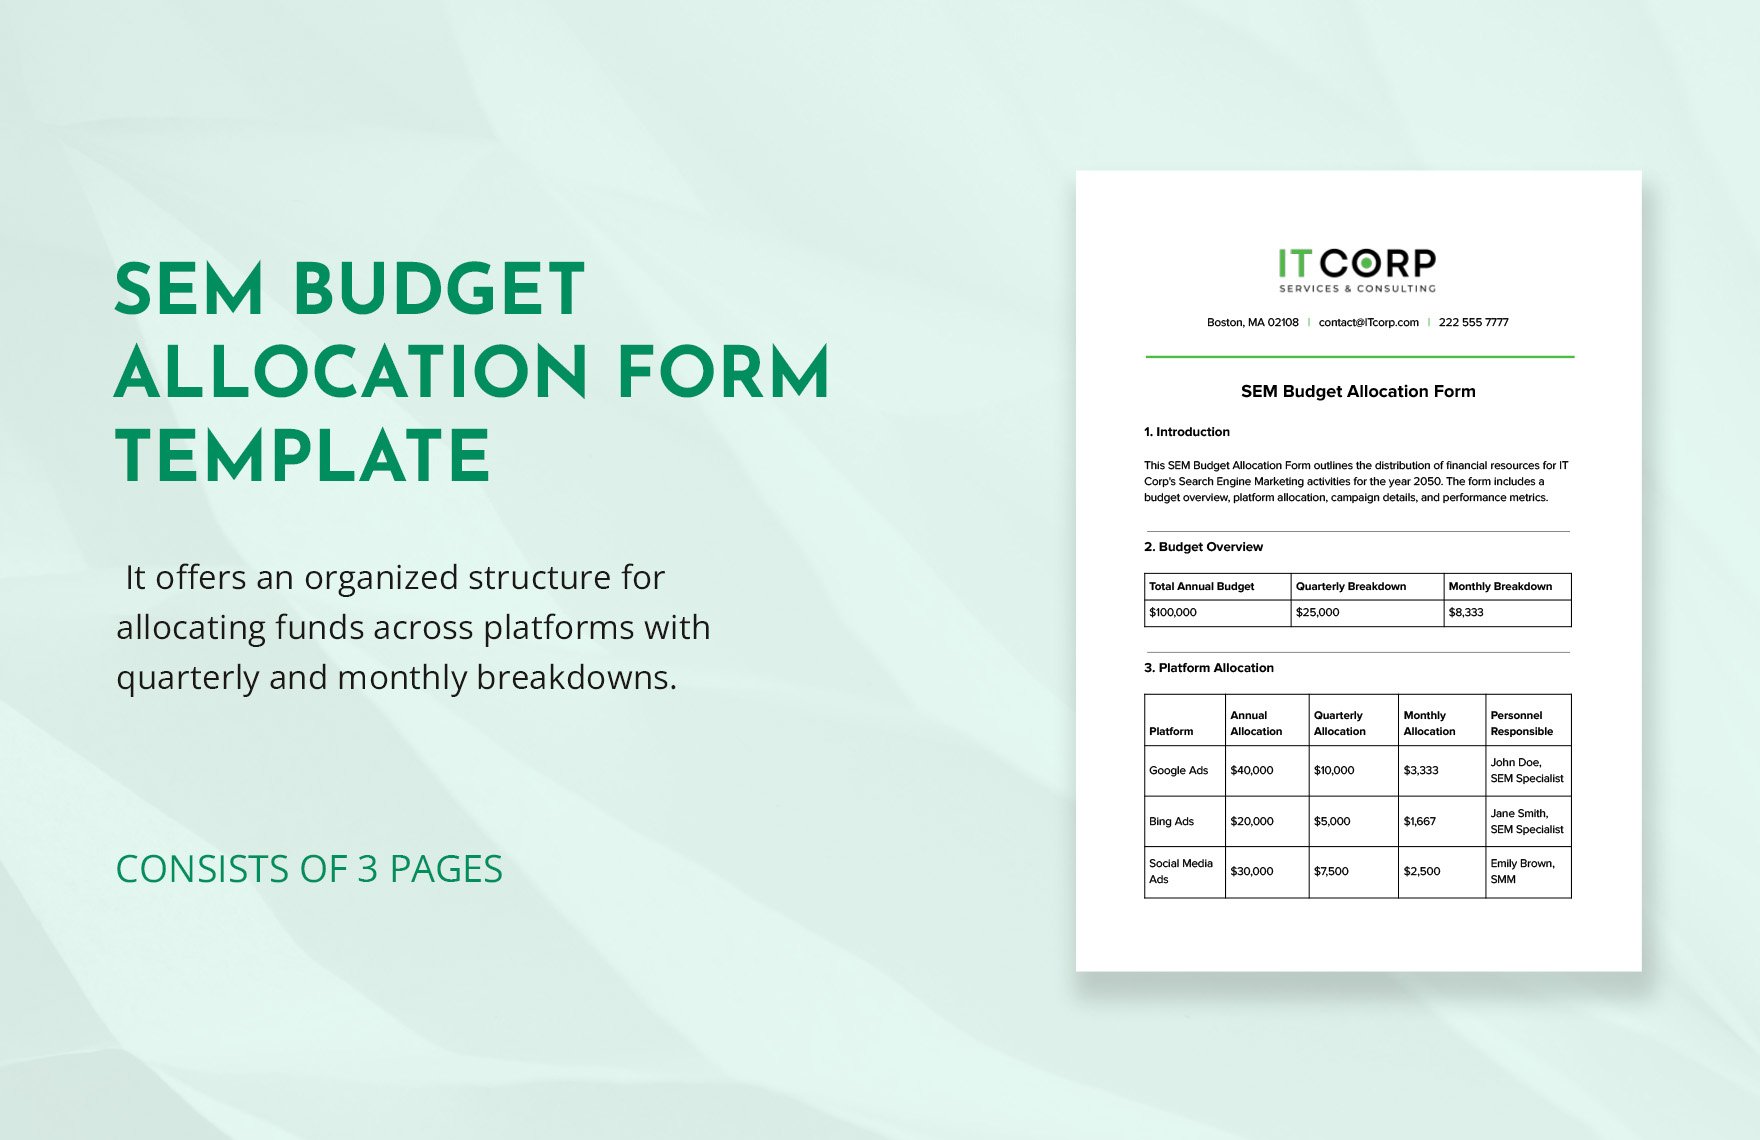 SEM Budget Allocation Form Template